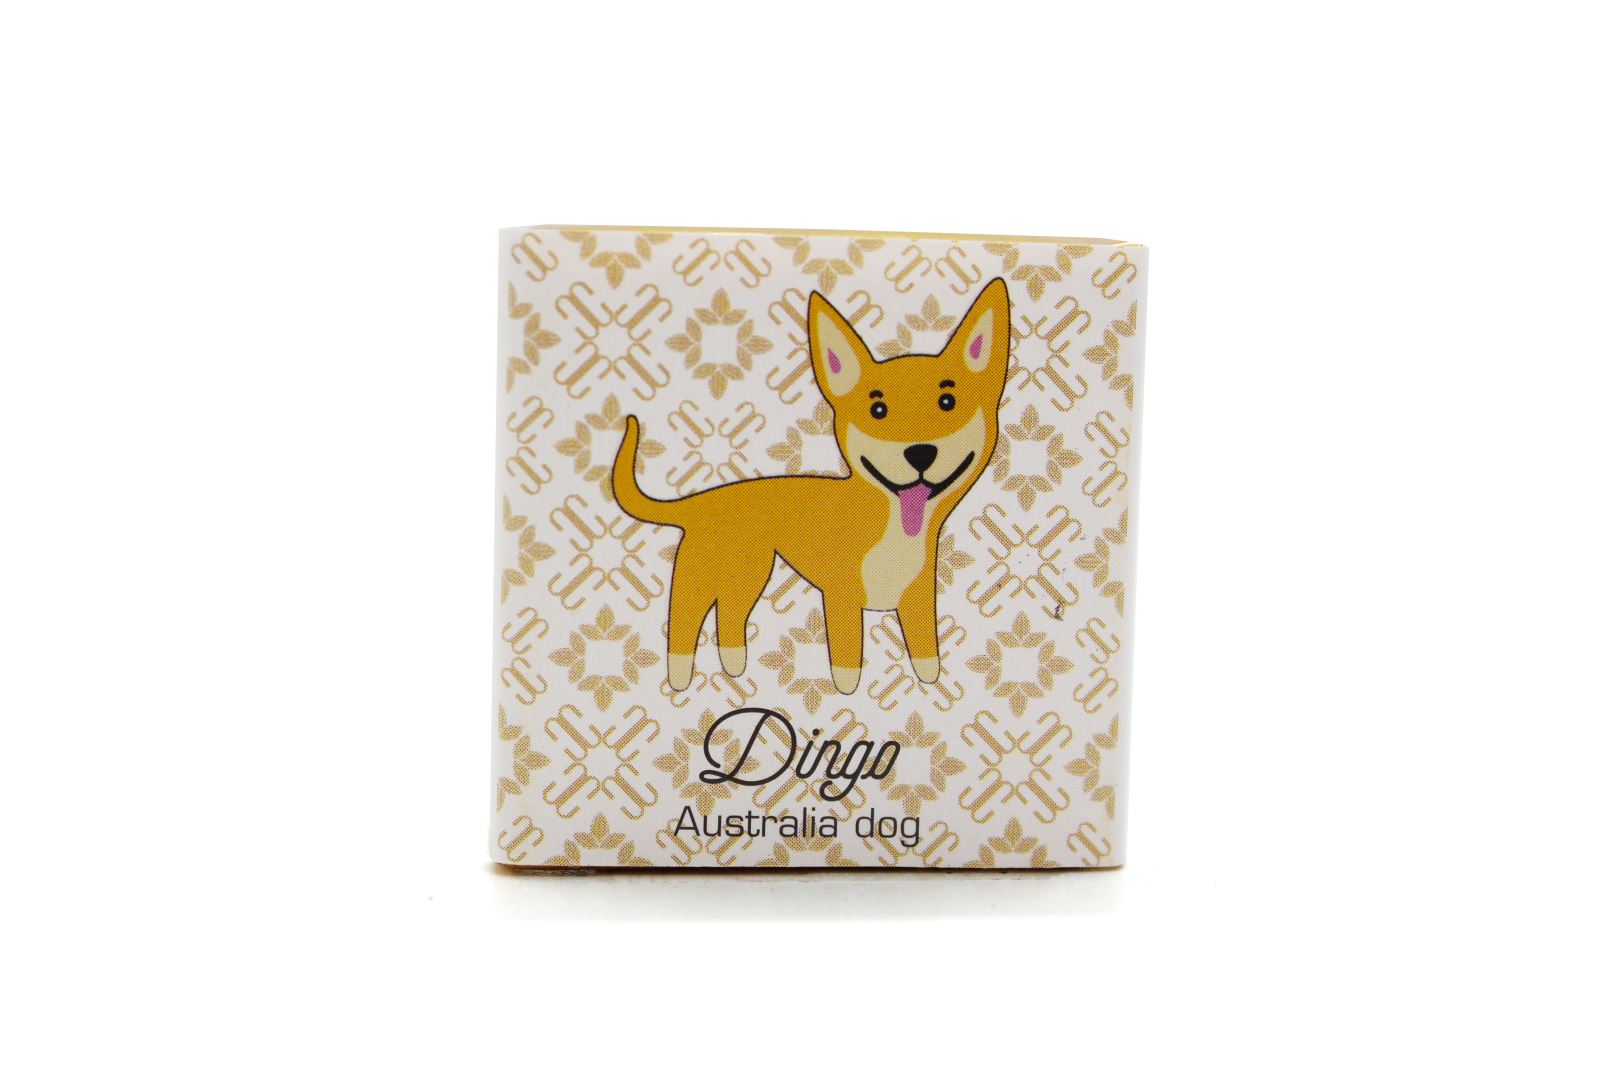 Pet 43 - Dingo